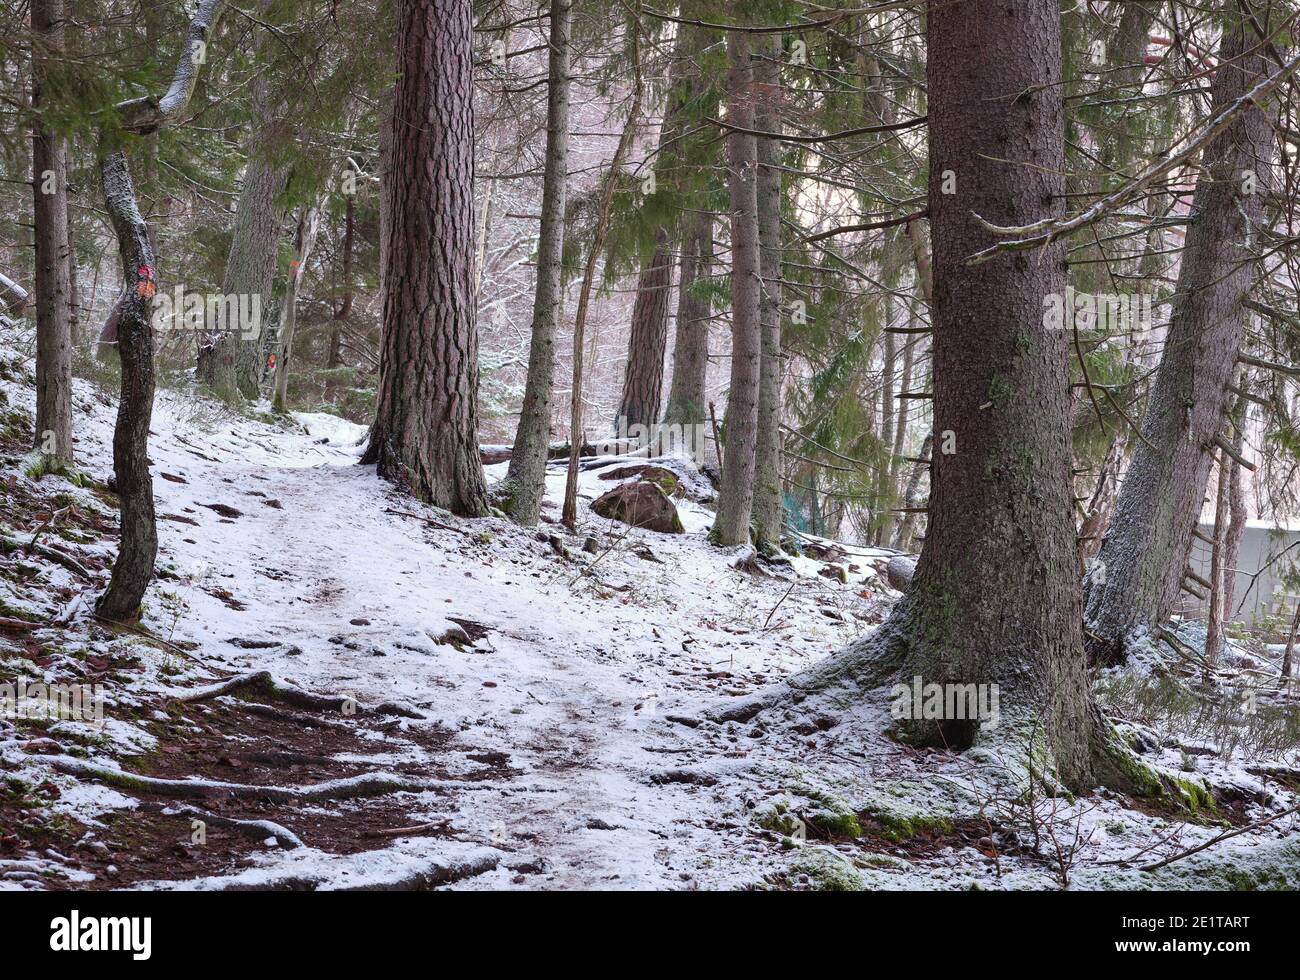 Foresta durante l'inverno con un po' di neve, vicino a Kvarnberget a Bogesundslandet, Vaxholm, Svezia Foto Stock